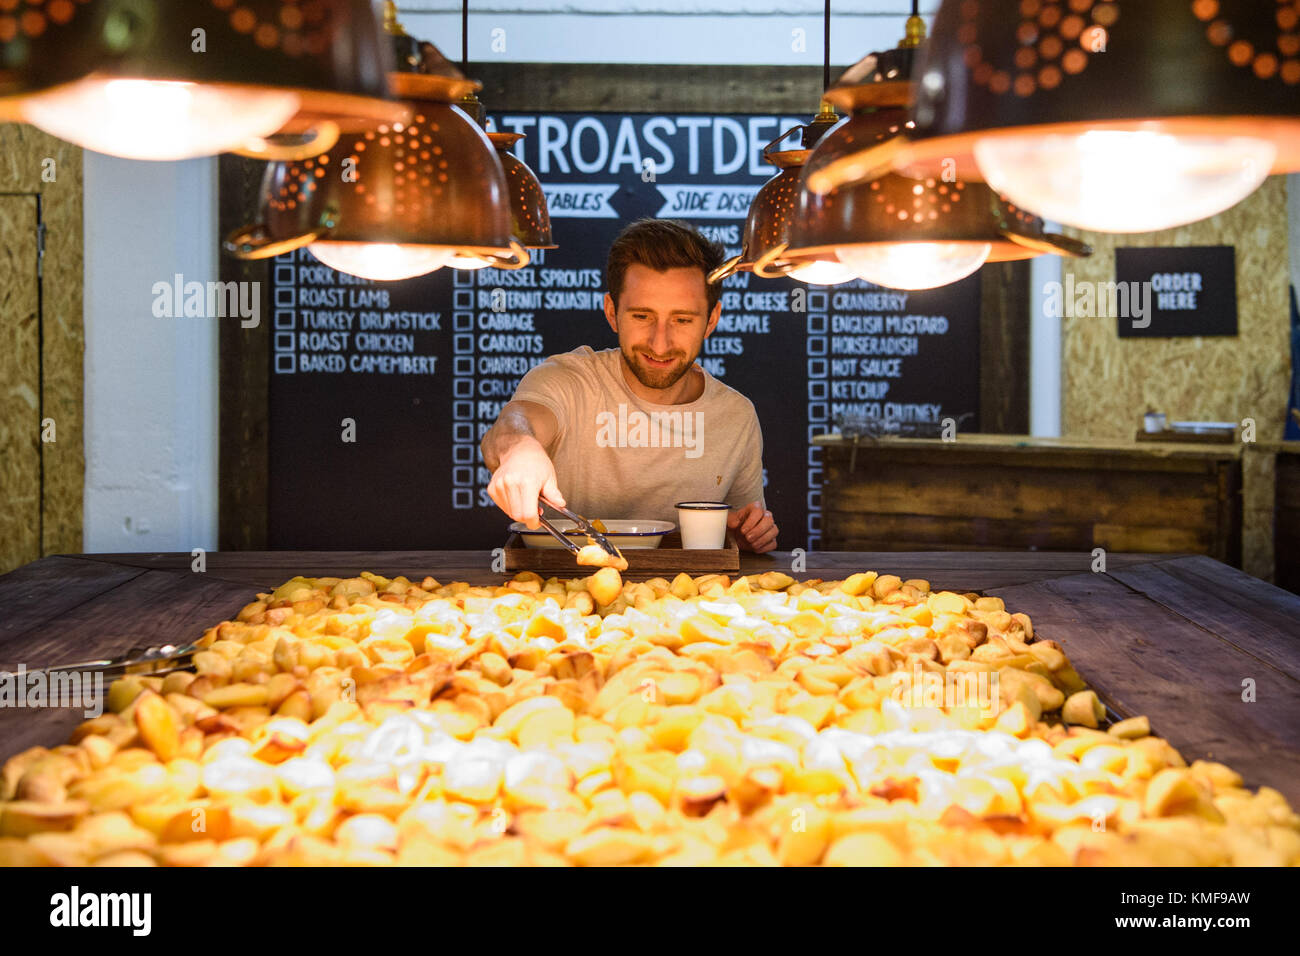 Liam Doolan sampling one of over 100,000 varieties of roast dinner, at the McCain Roastaurant in Shoreditch, east London, Stock Photo